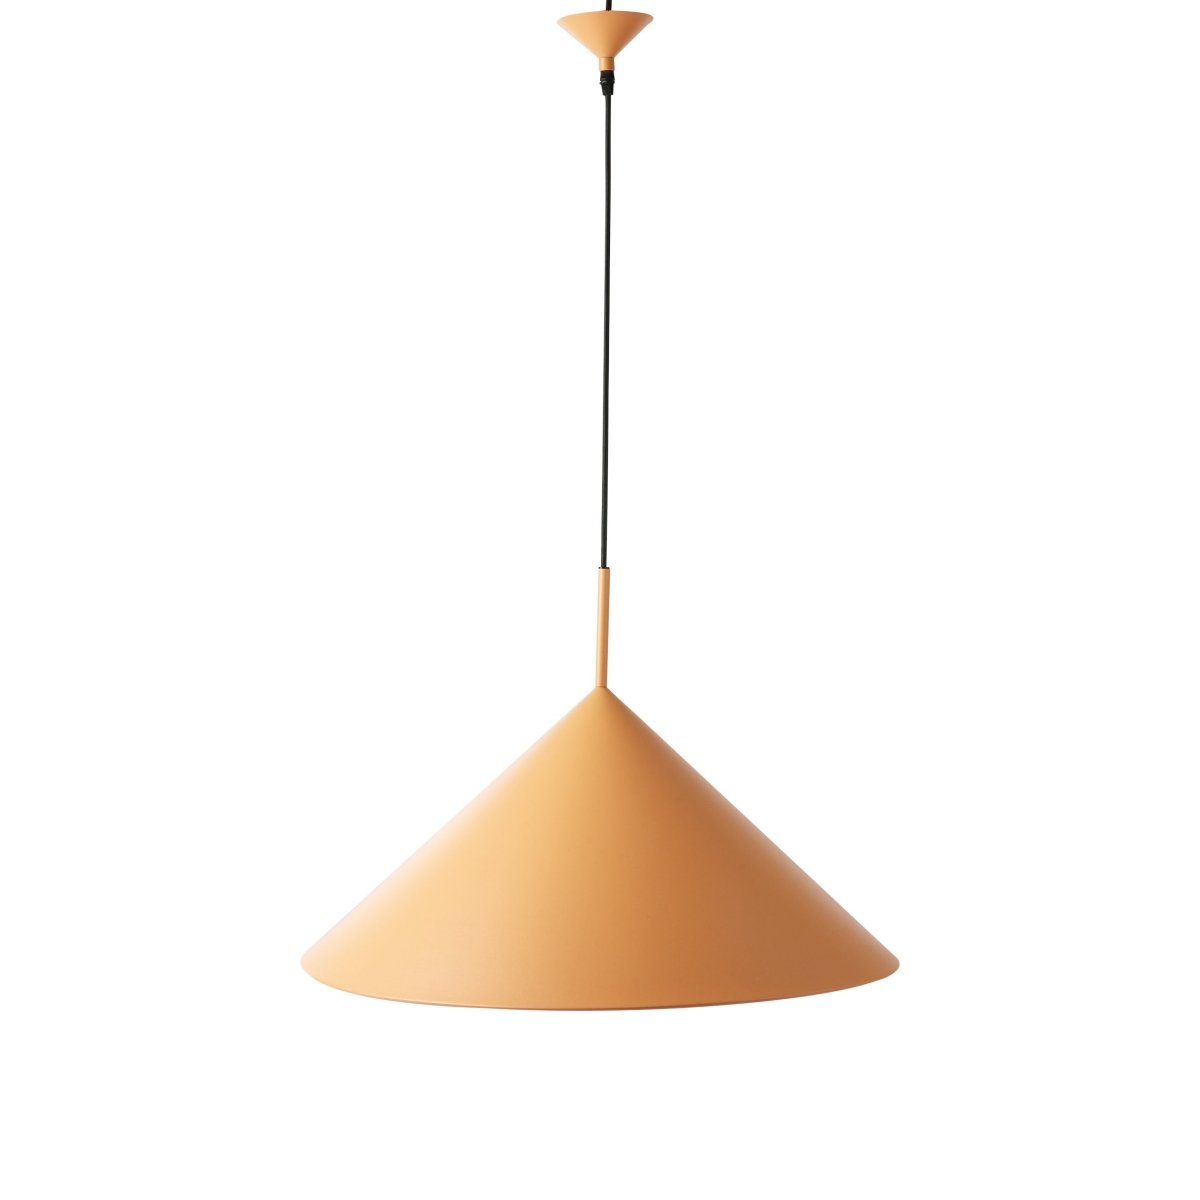 Metal Triangle Pendant Lamp L Peach - House of Orange